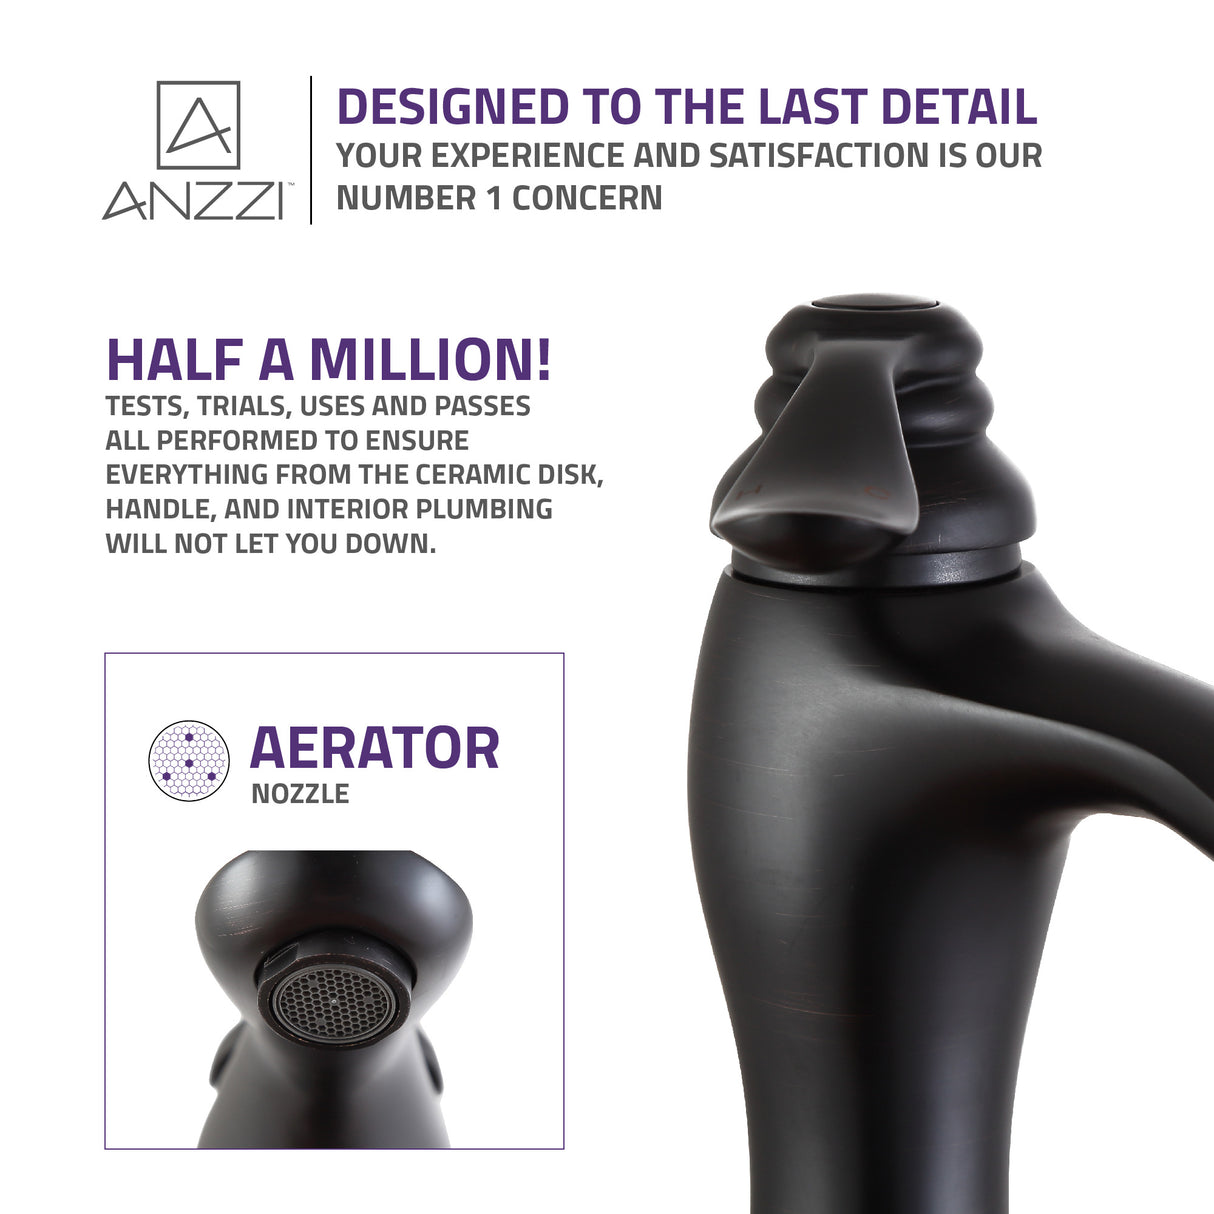 ANZZI L-AZ104ORB Anfore Single Hole Single Handle Bathroom Faucet in Oil Rubbed Bronze